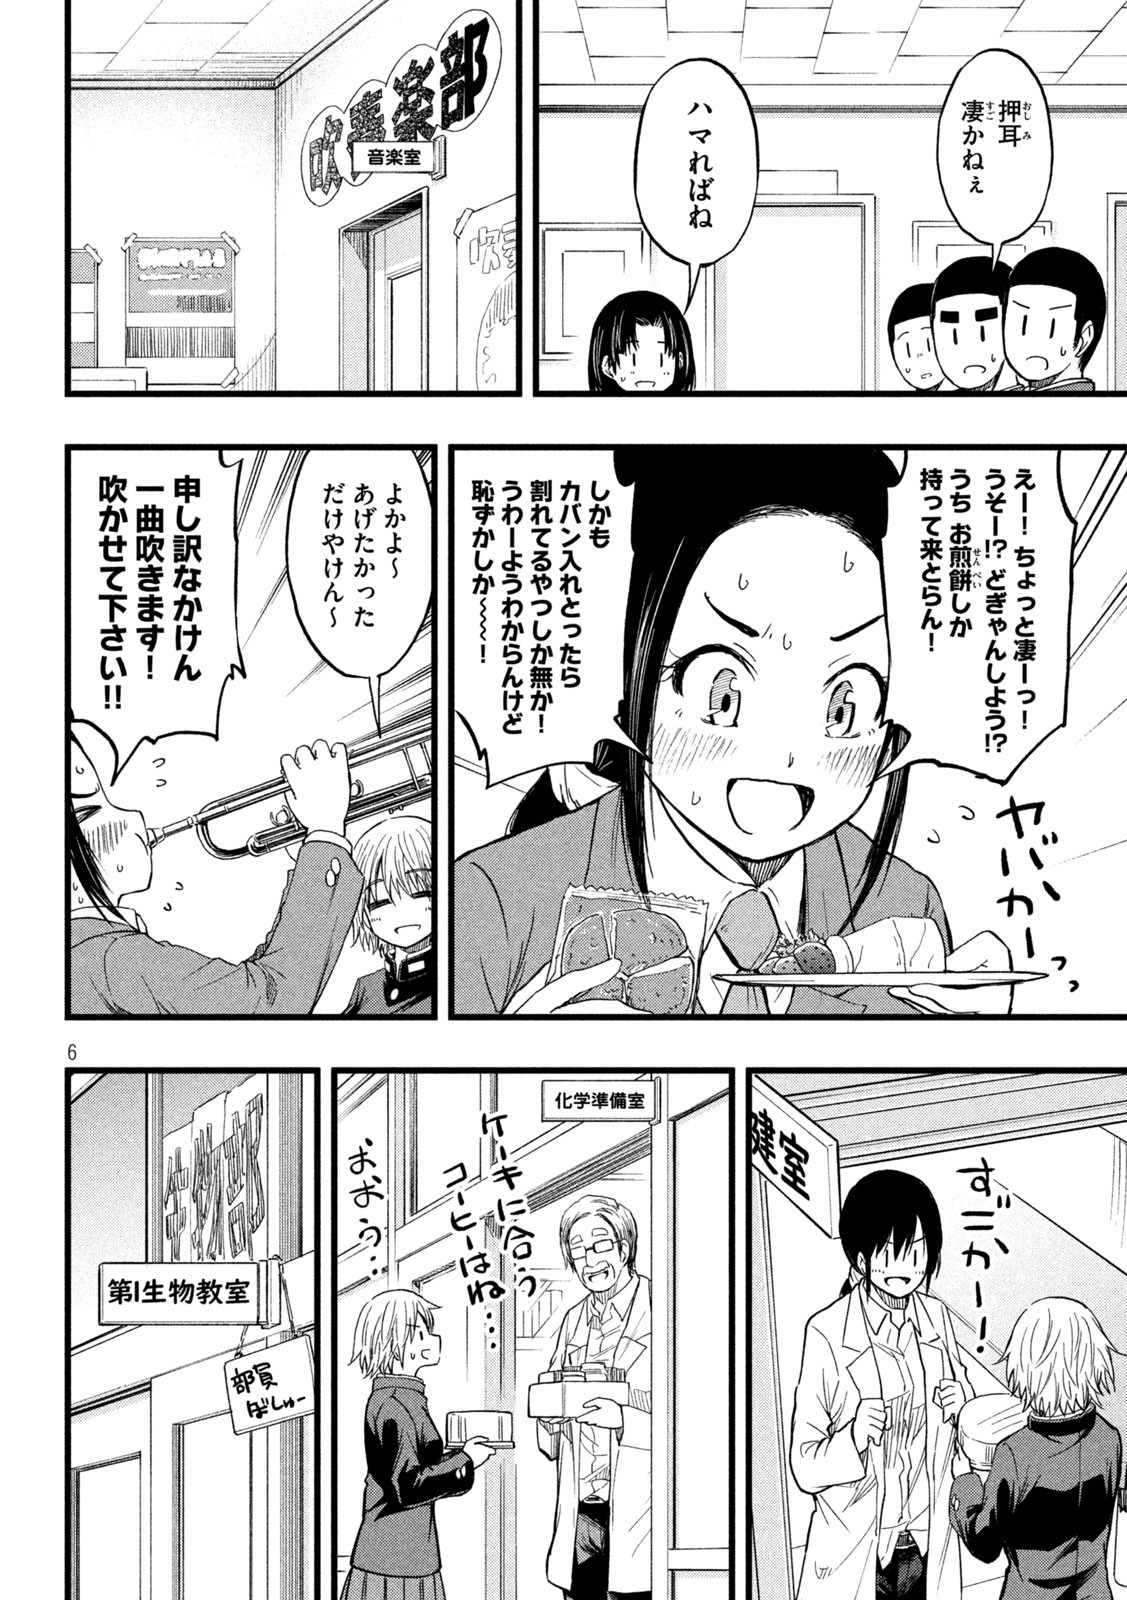 Koharu haru! - Chapter 88 - Page 2